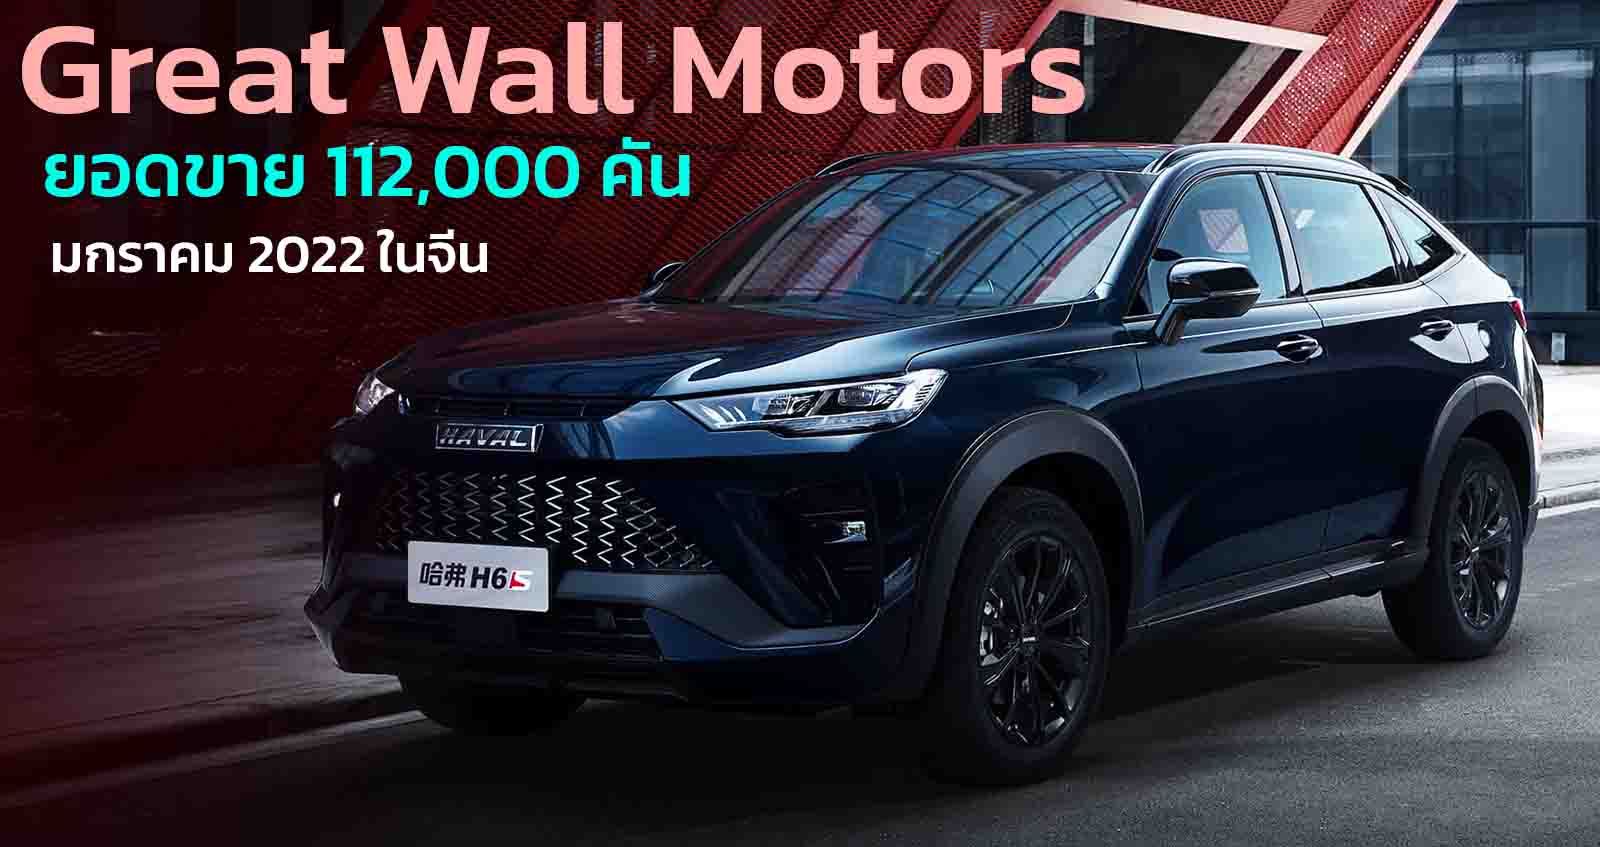 Great Wall Motors ยอดขายรถยนต์ 112,000 คัน มกราคม 2022 ในจีน